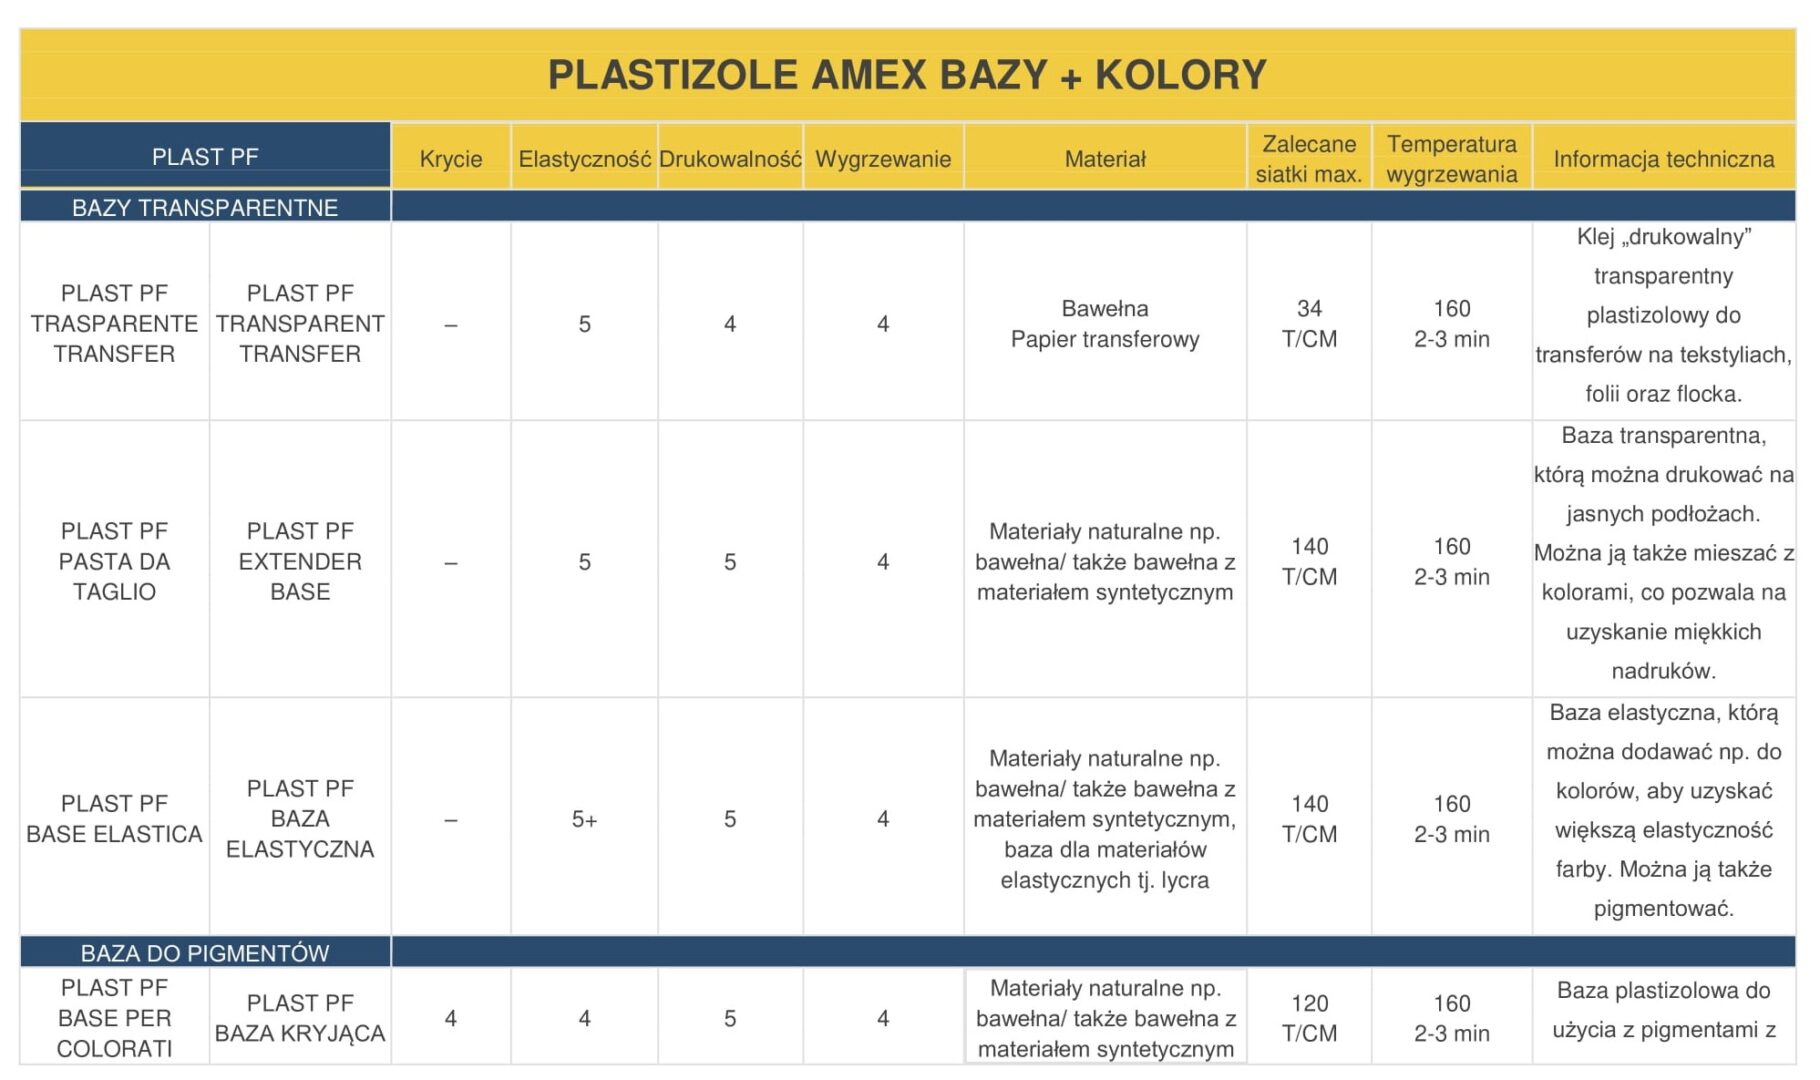 PLASTIZOLE-AMEX-BAZY-KOLORY-1